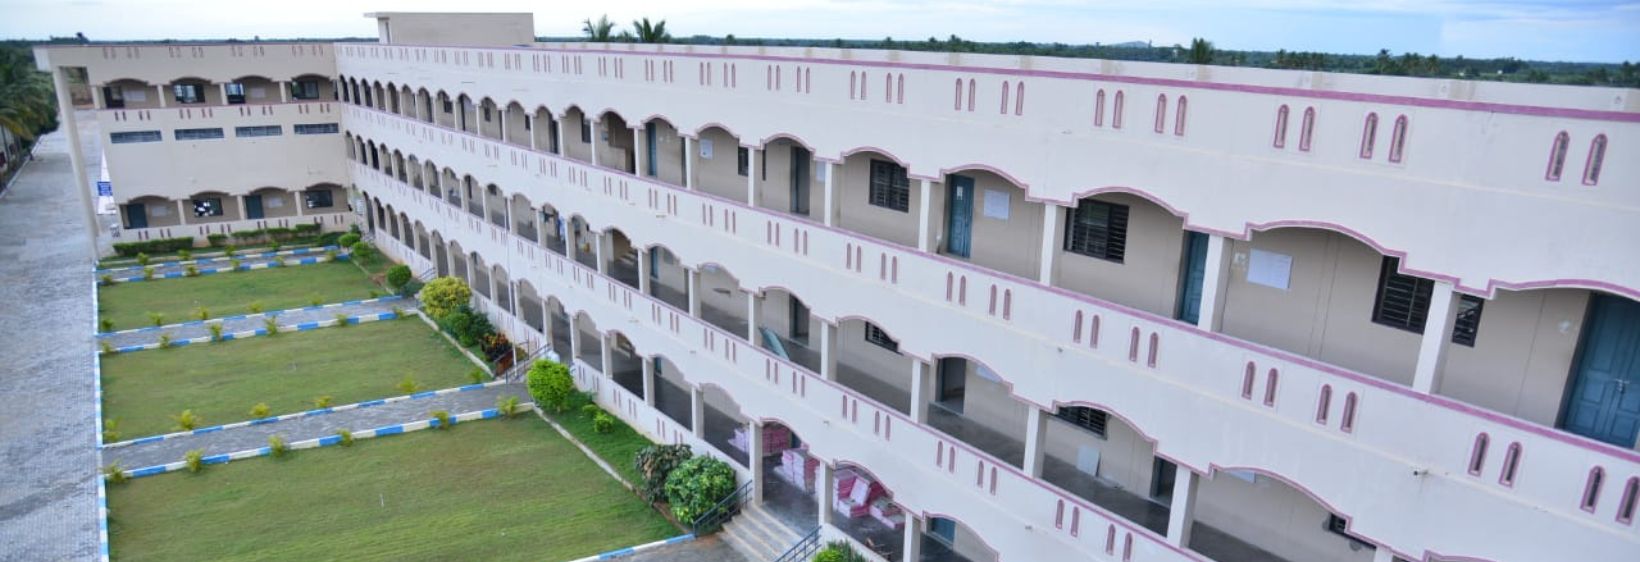 Arcot Sri Mahalakshmi Women's College of Nursing - Vellore